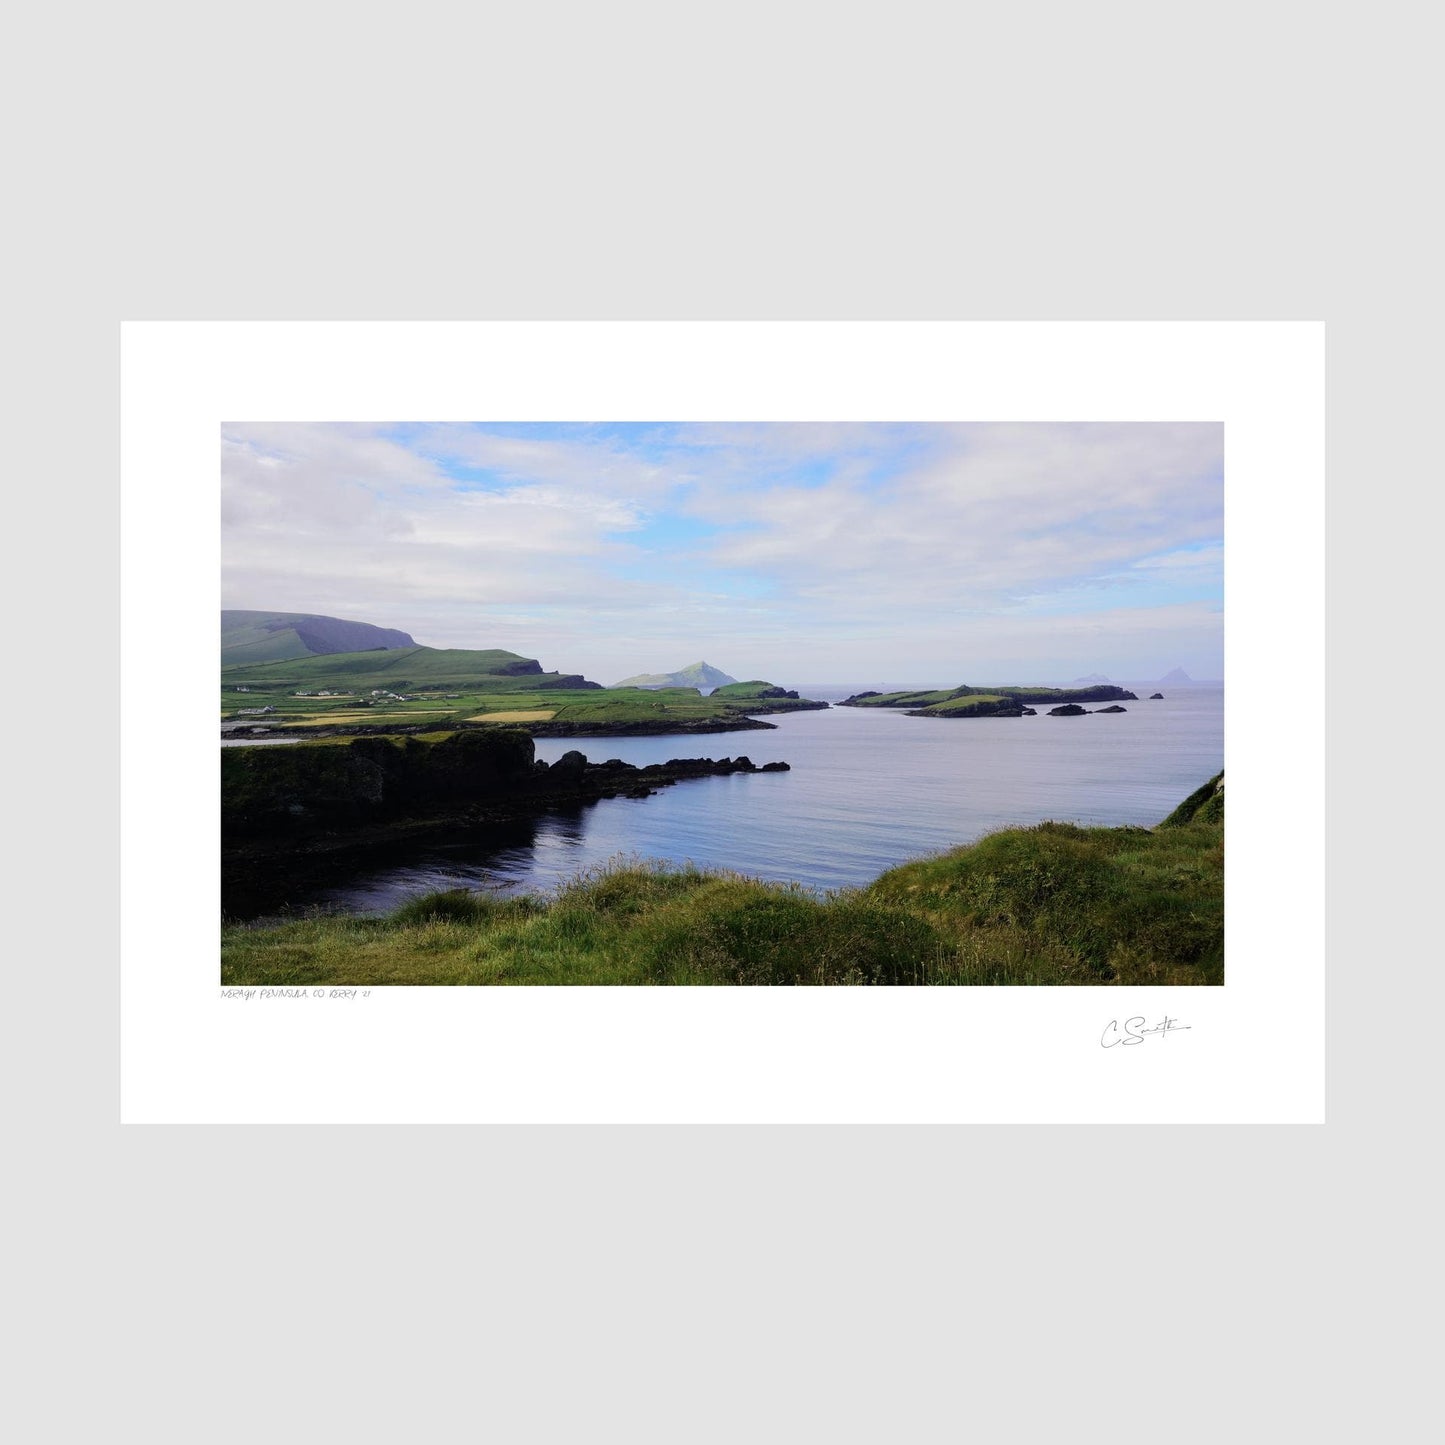 Iveragh Peninsula coastline, Kerry, Ireland - Black and white photography prints